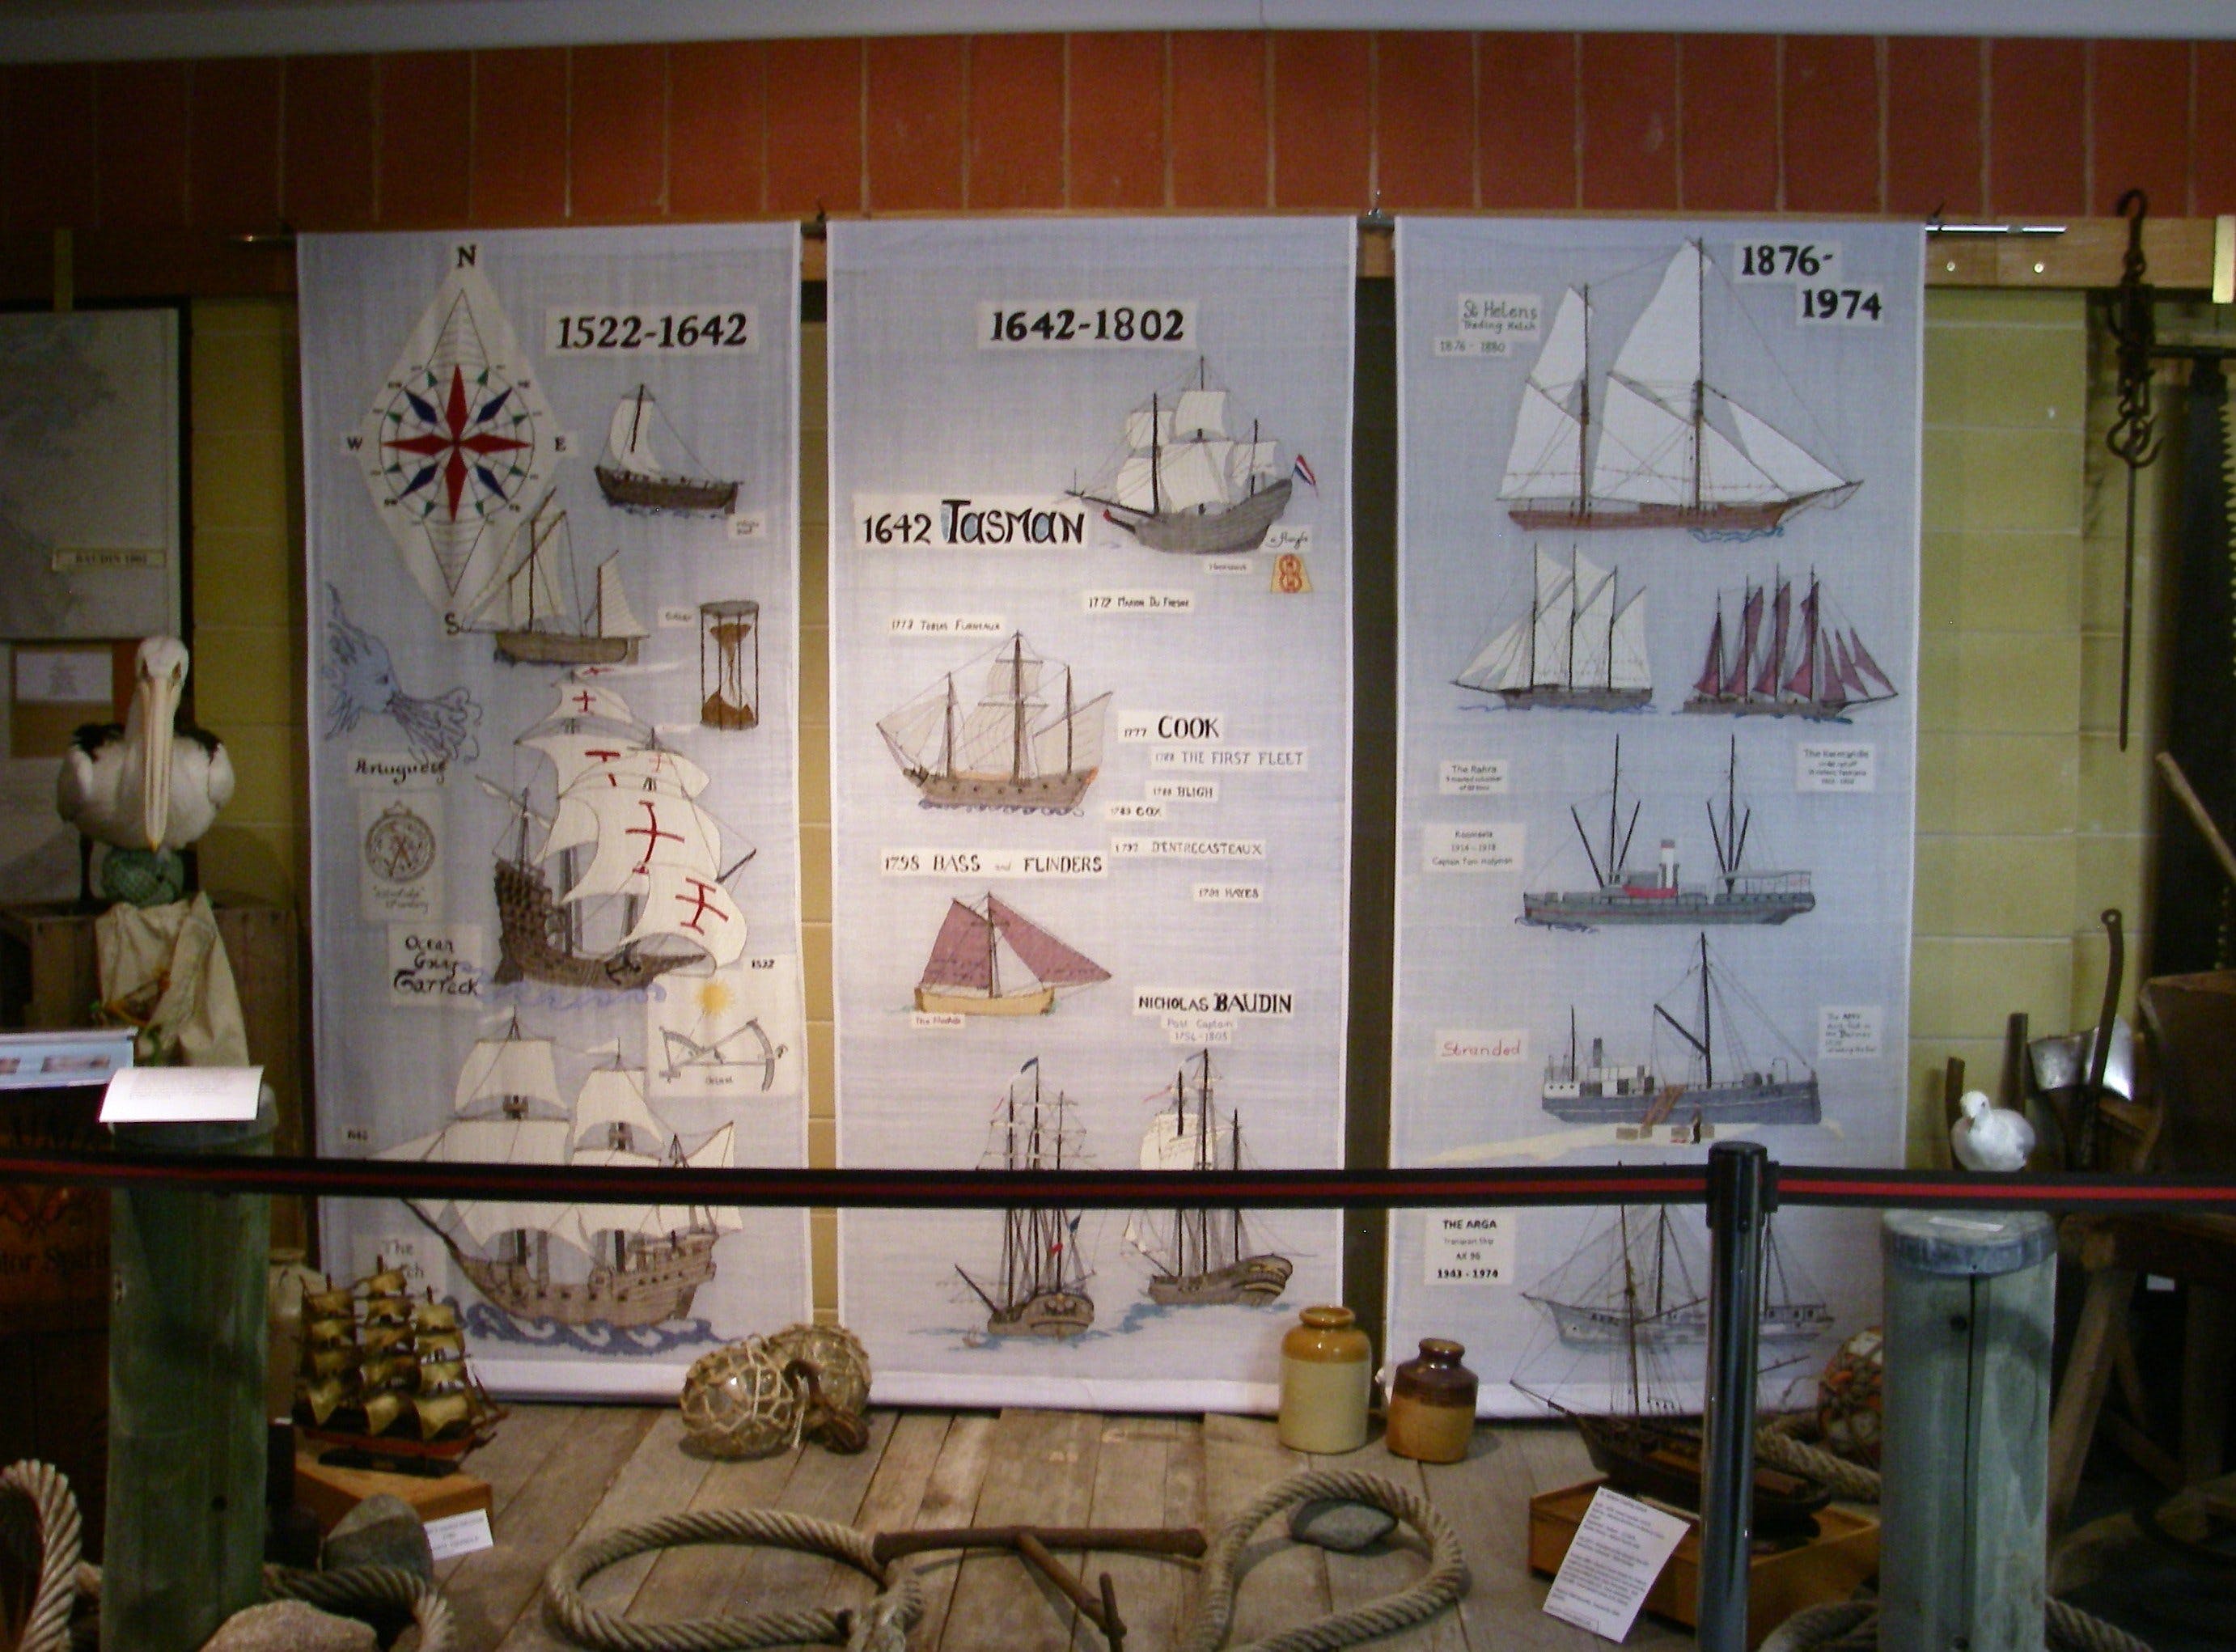 St Helens History Room - Accommodation Nelson Bay